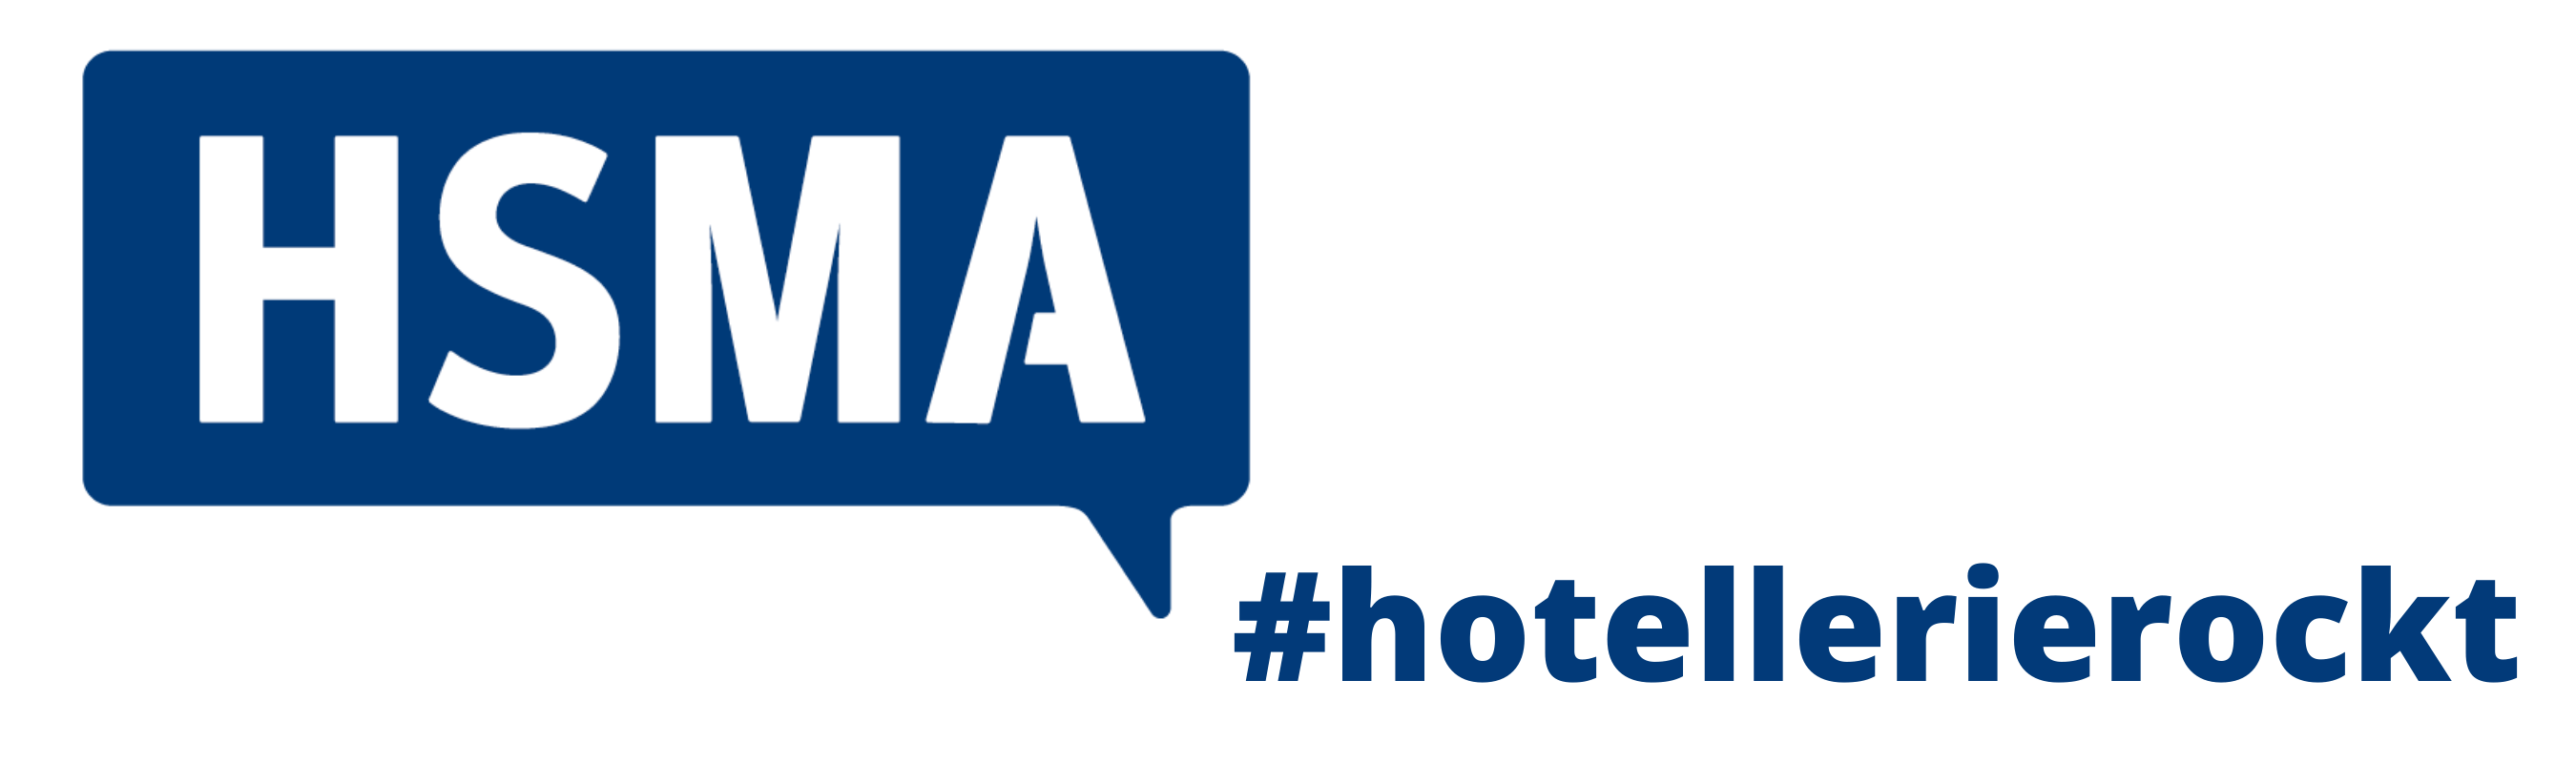 HSMA Logo - Hotellerie rockt